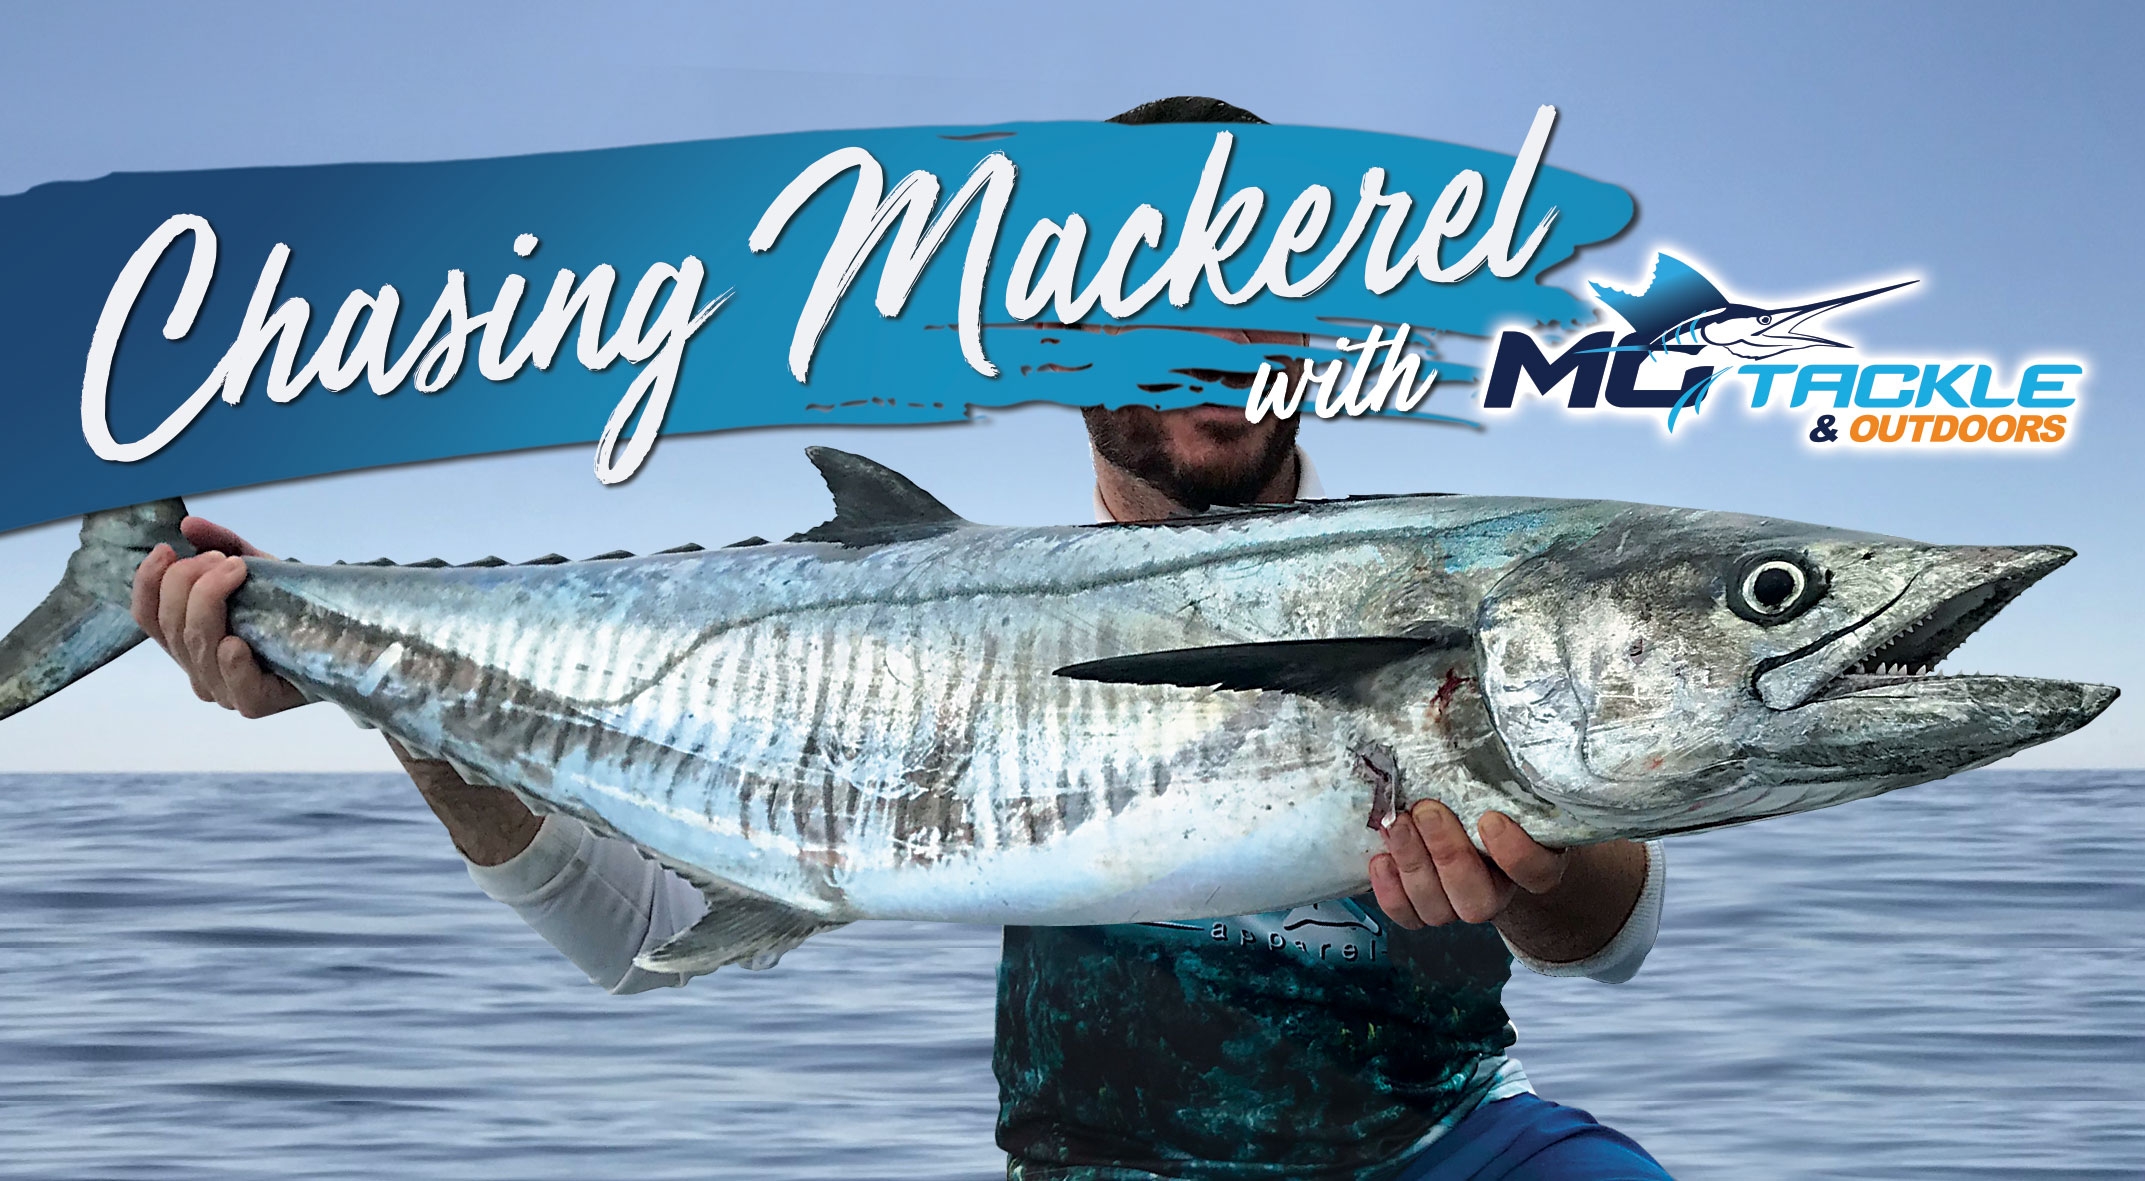 Chasing Mackerel With Motackle